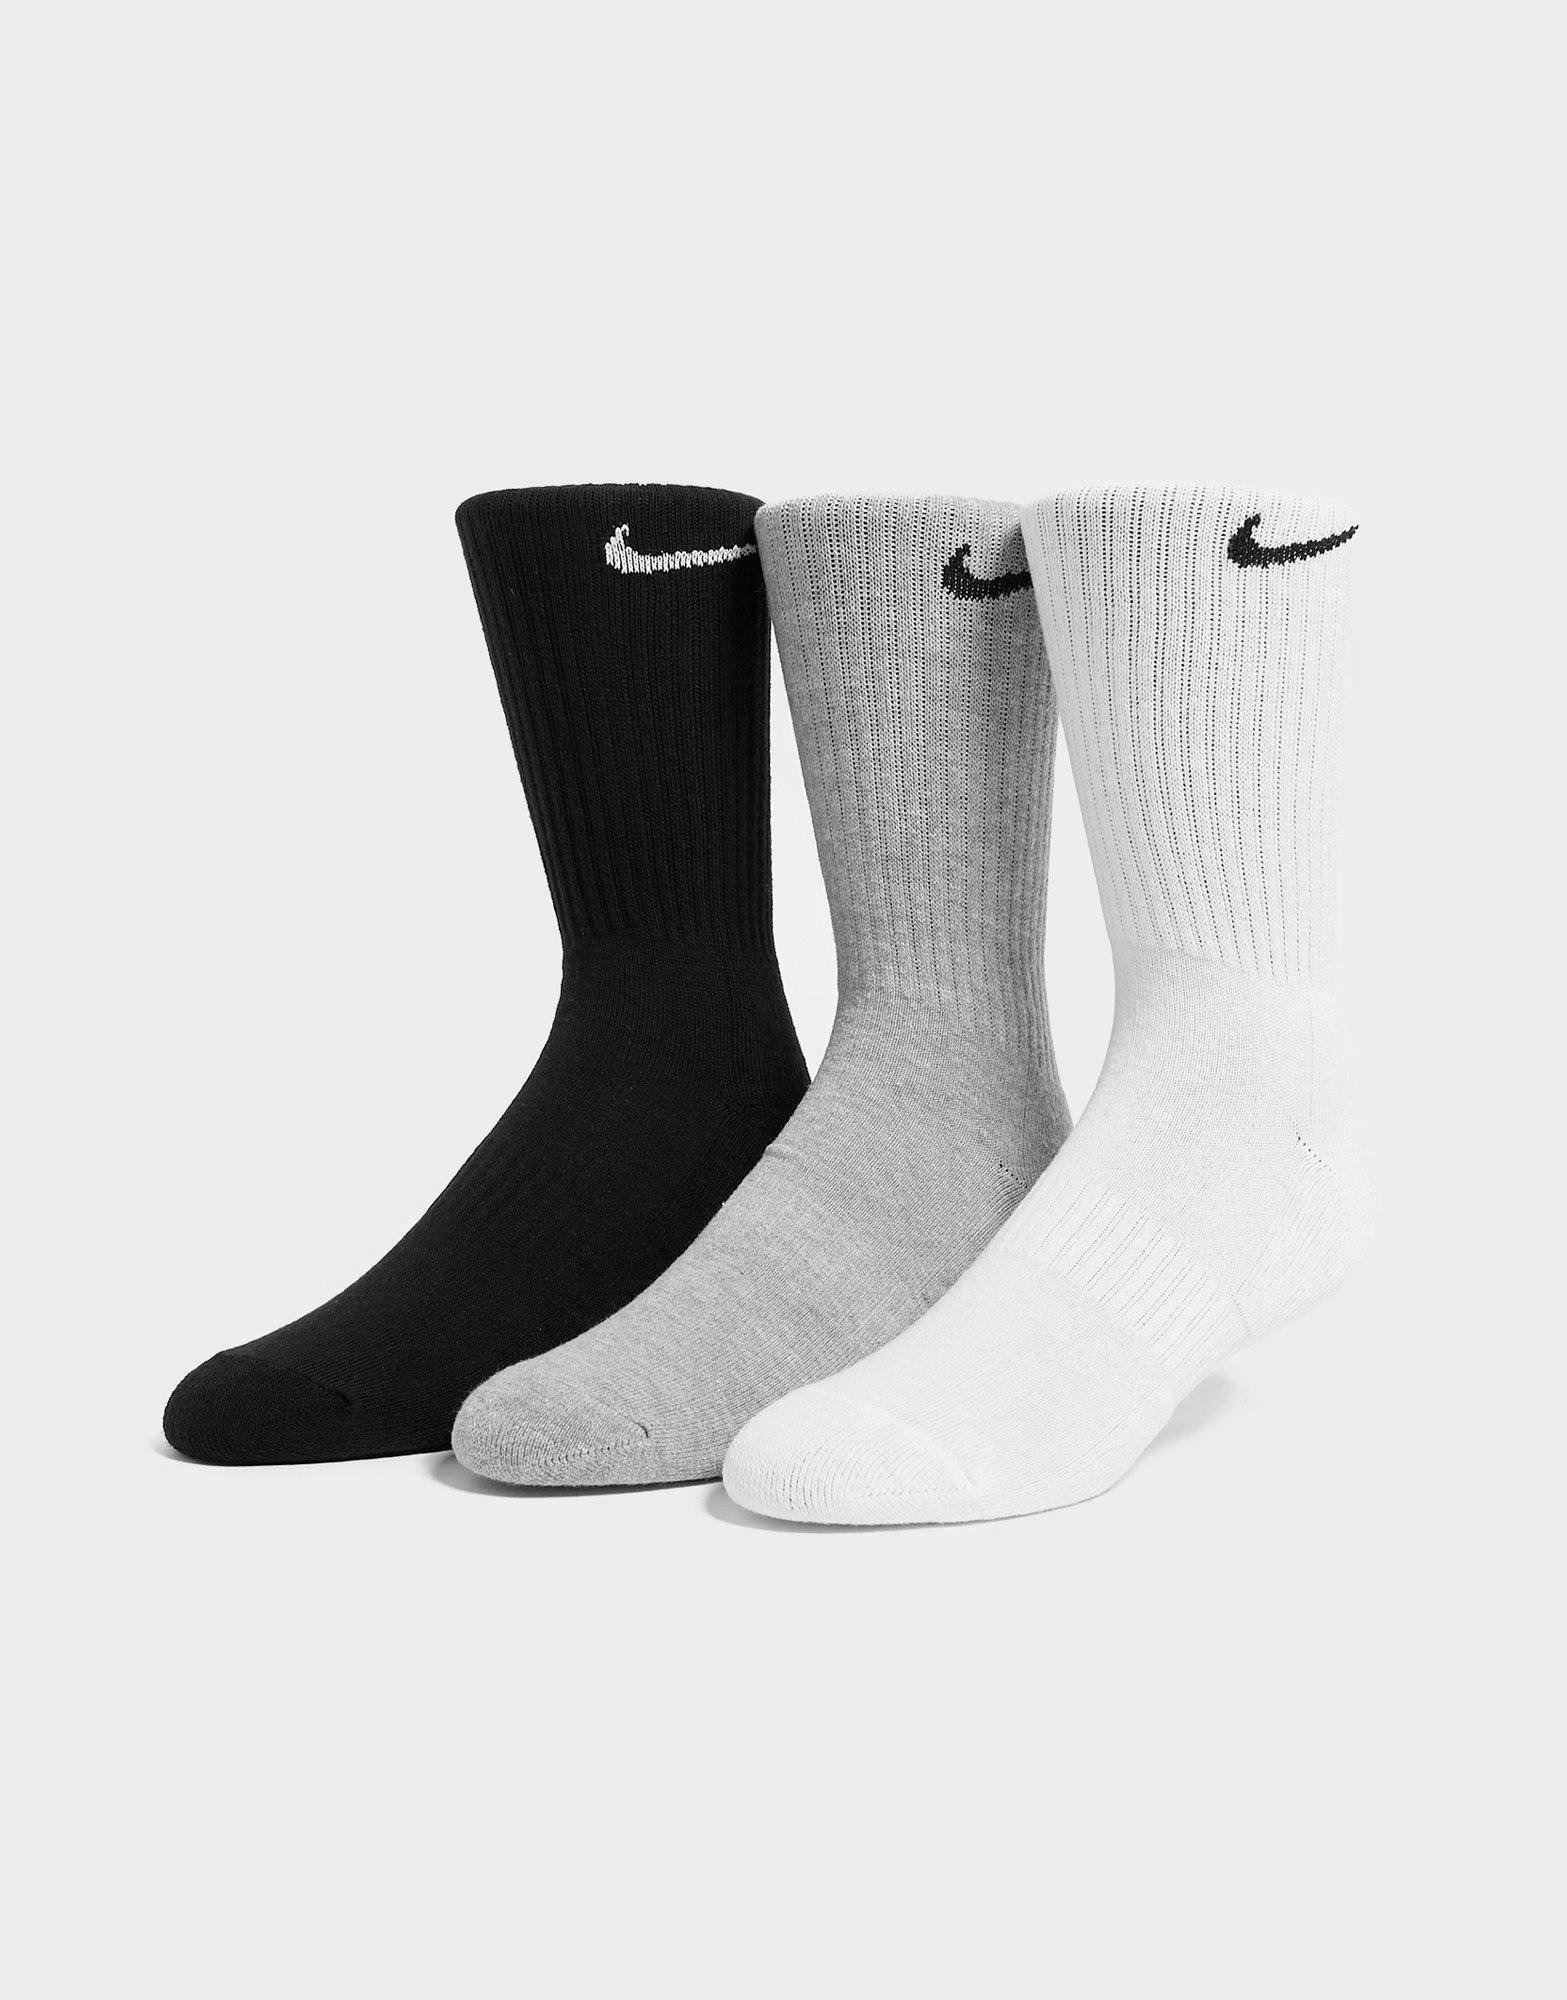 Lleno Maligno tarta Nike calcetines 3-Pack Cushioned Crew en | JD Sports España